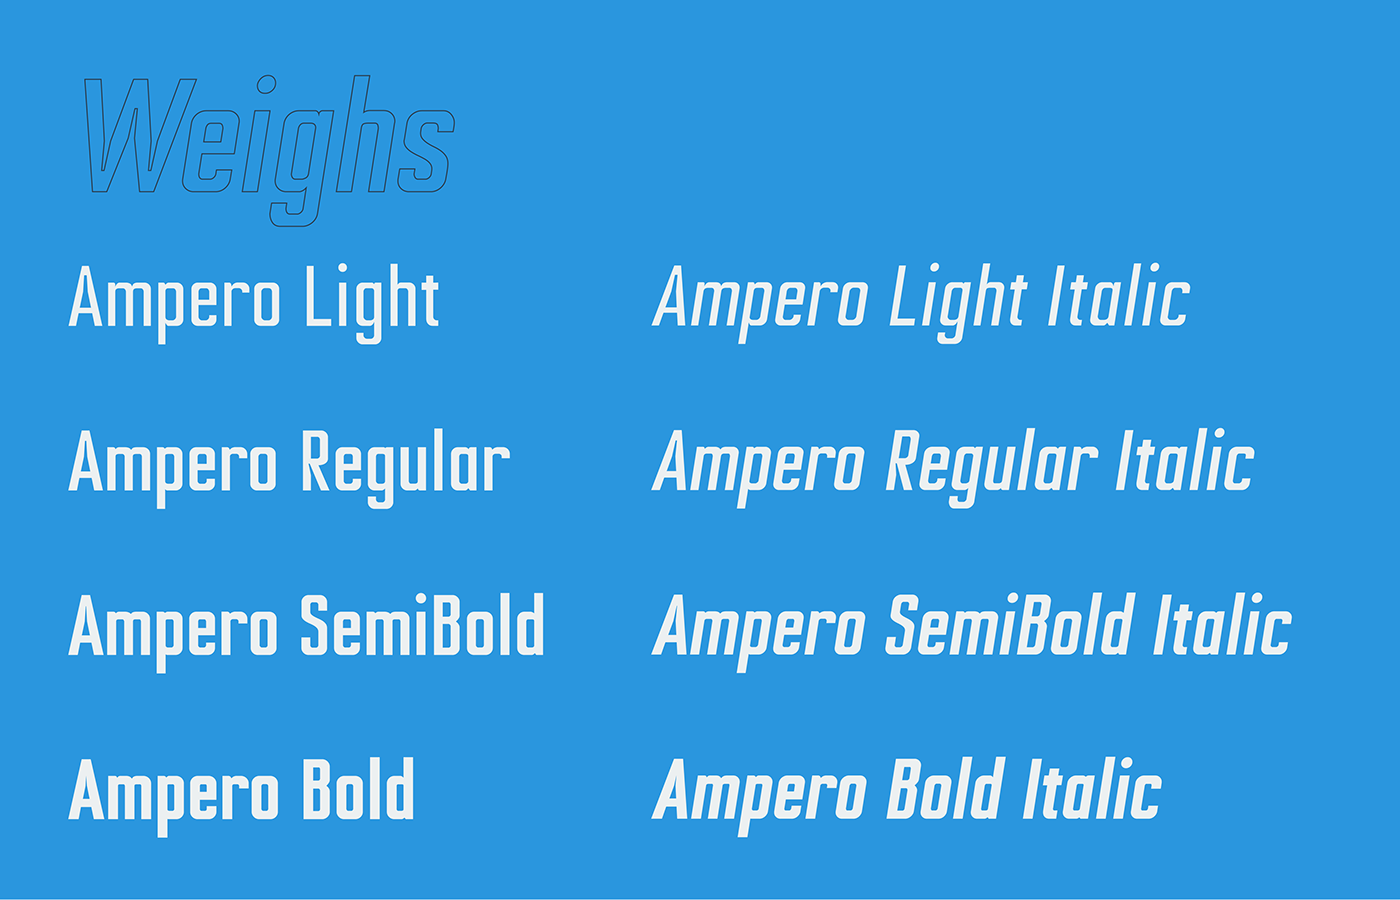 Ampero Free Font - sans-serif